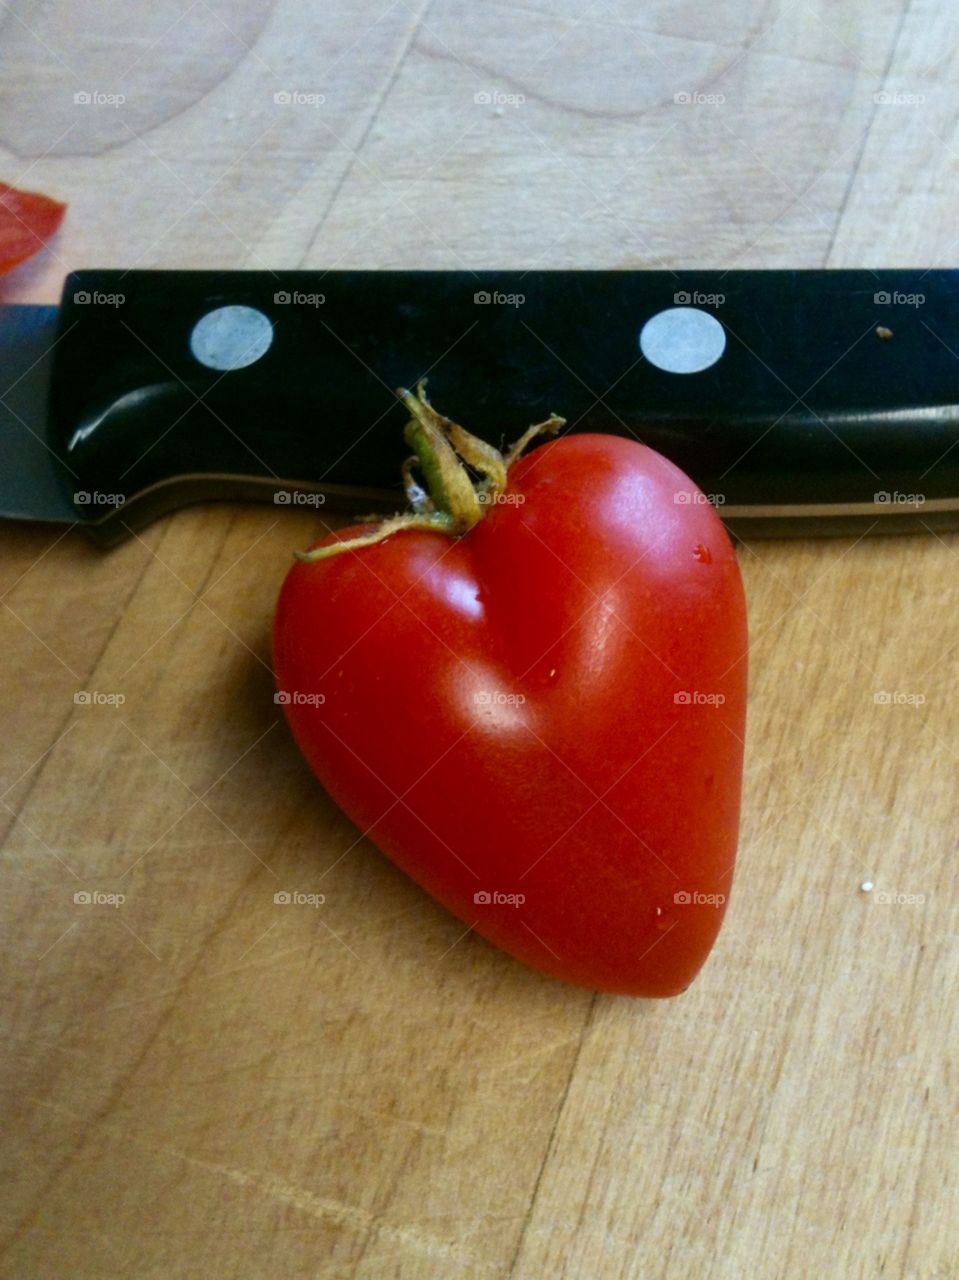 Love tomatoes 